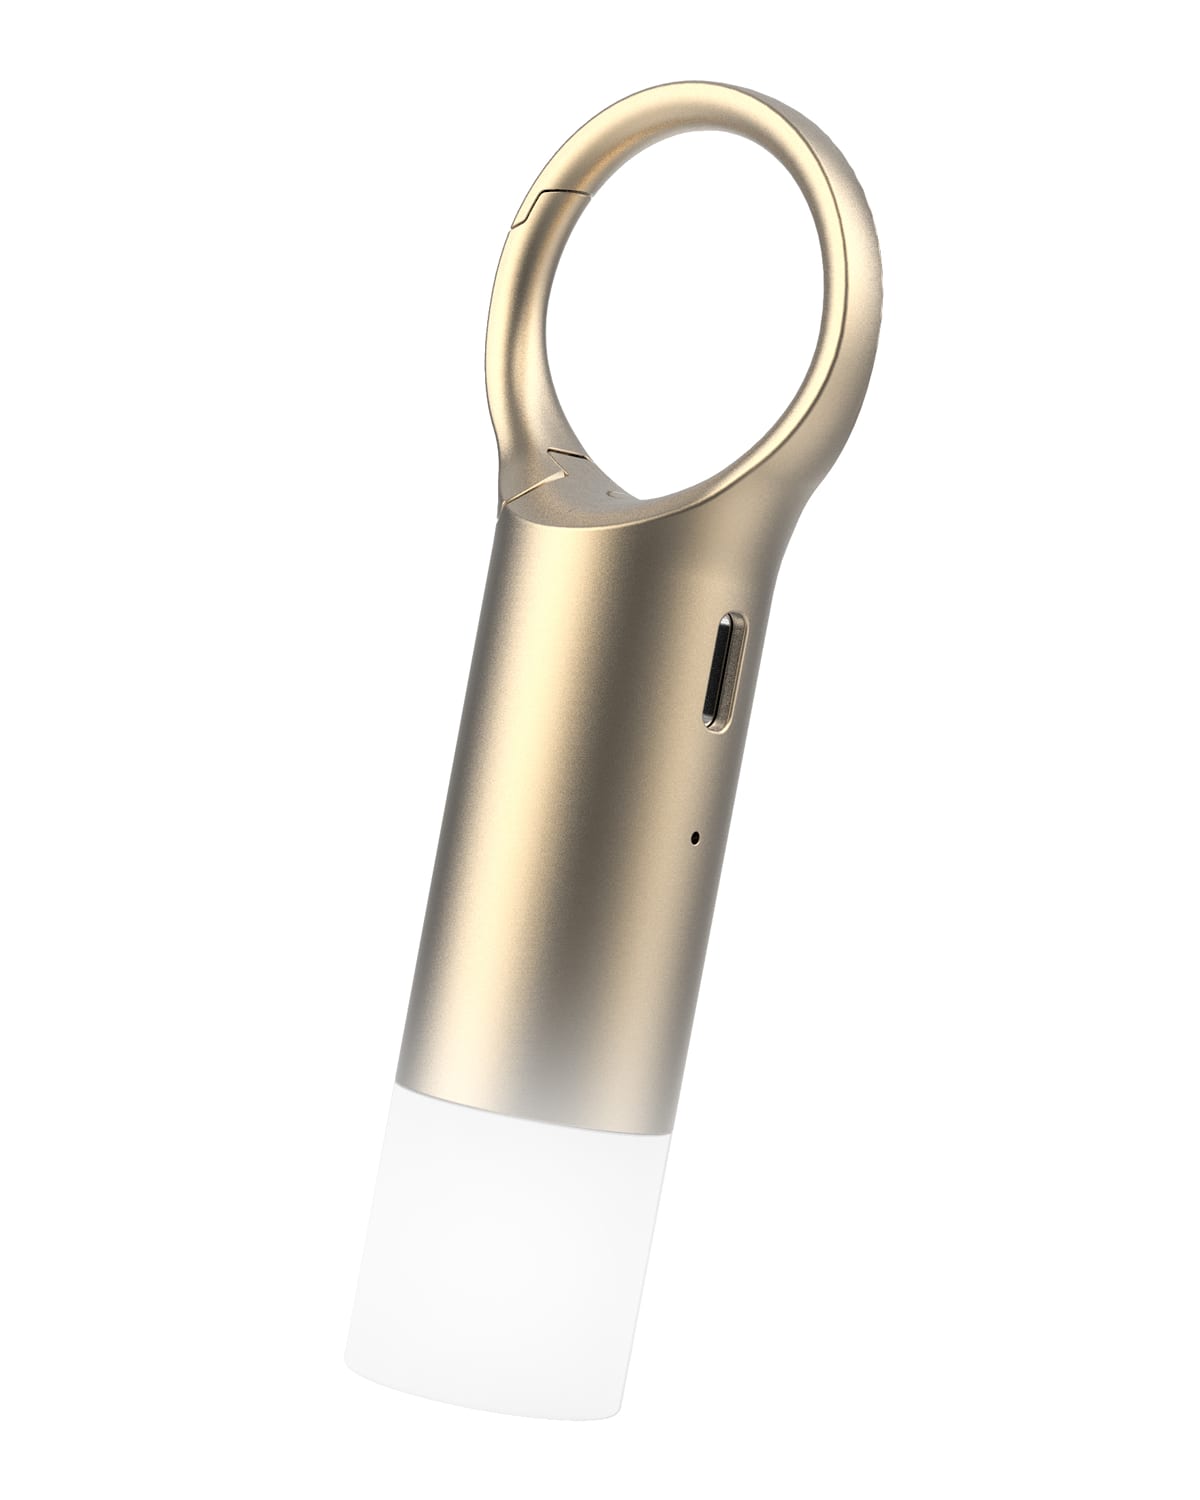 Lexon Design Nomaday Flash - Wearable LED Lamp with Clip